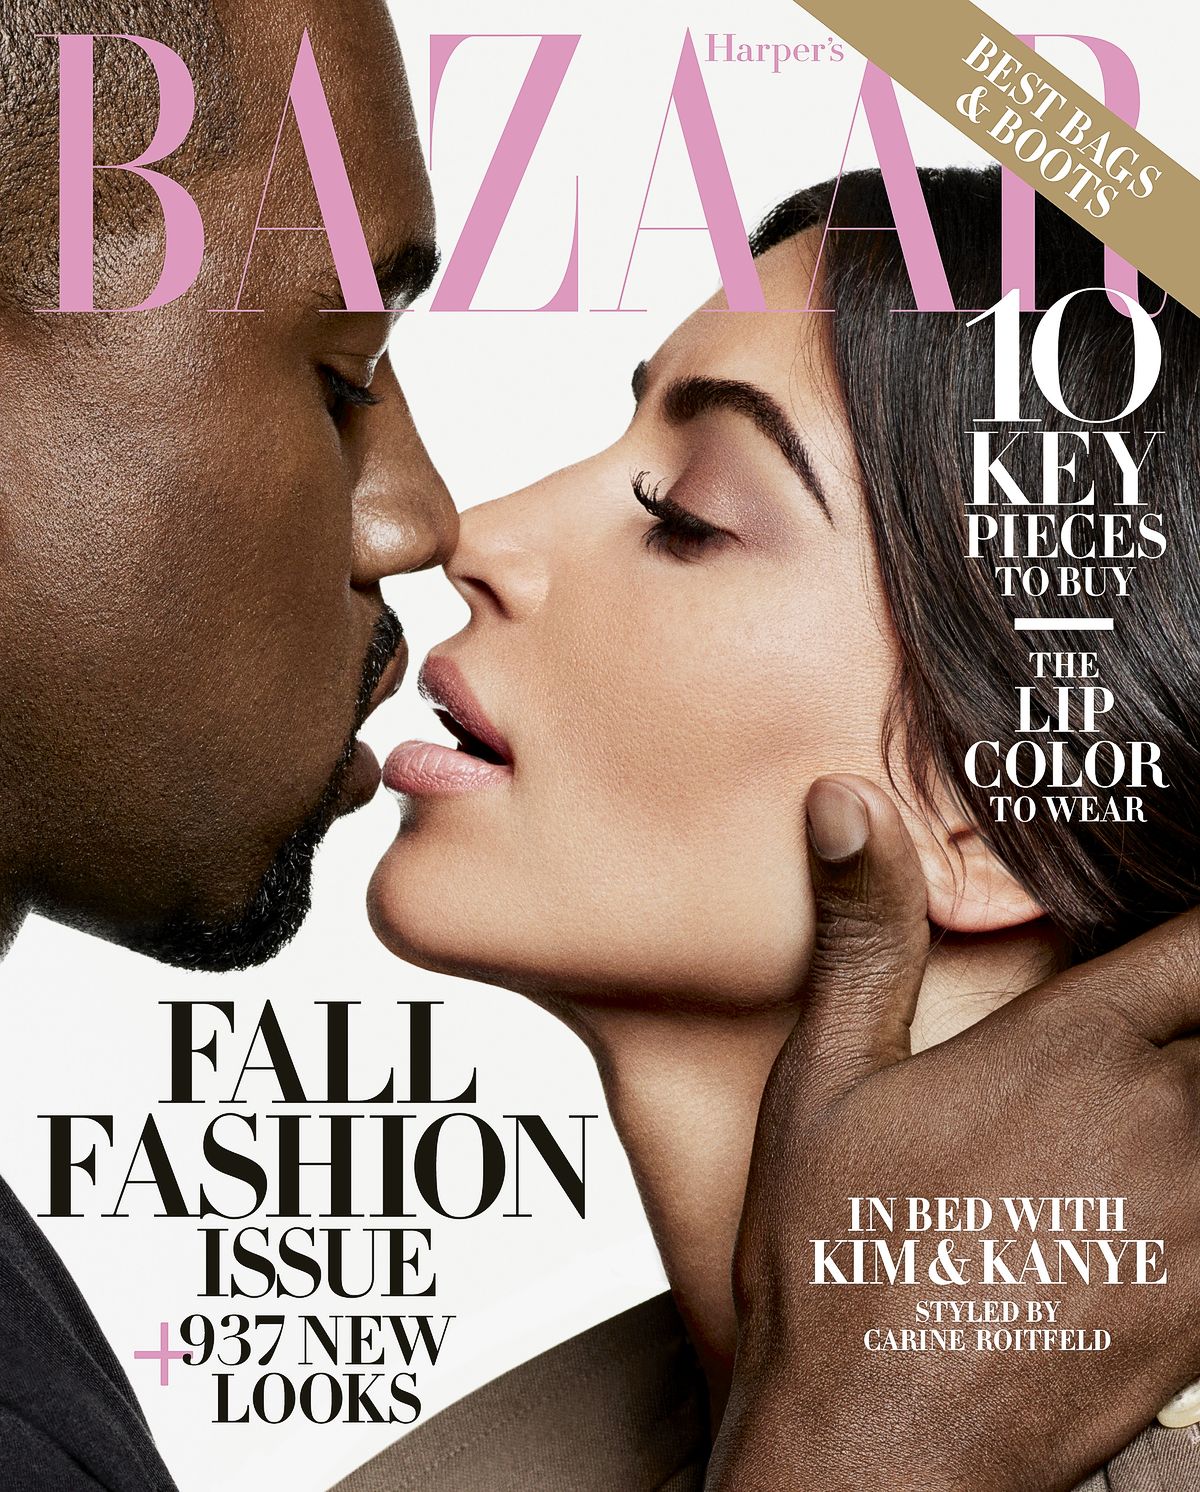 Ким Кардашьян и Канье Уэст на обложке журнала Harper's BAZAAR